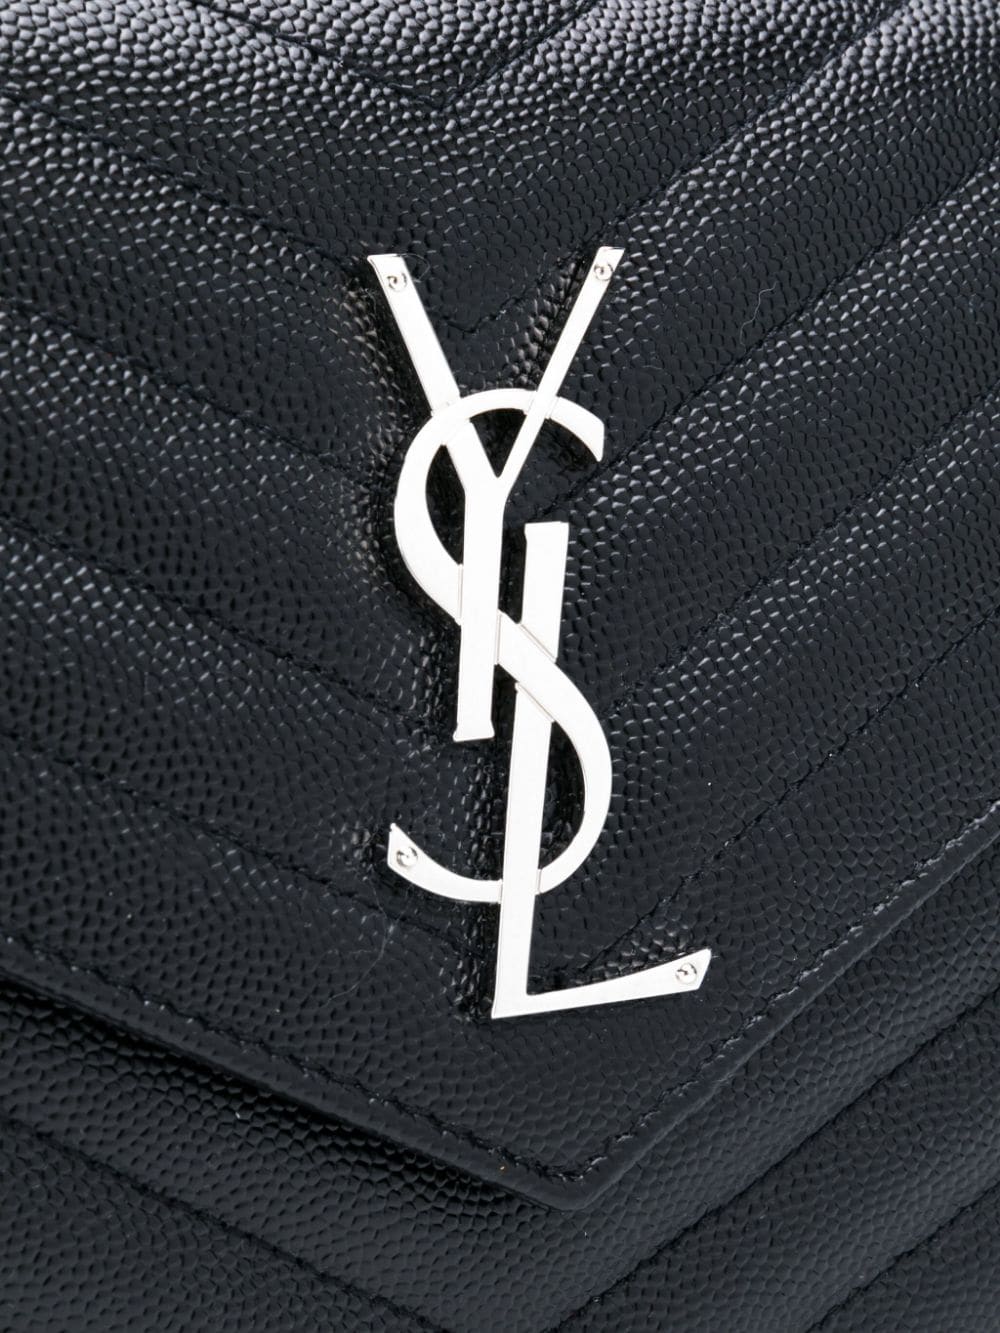 Black leather monogram wallet on chain